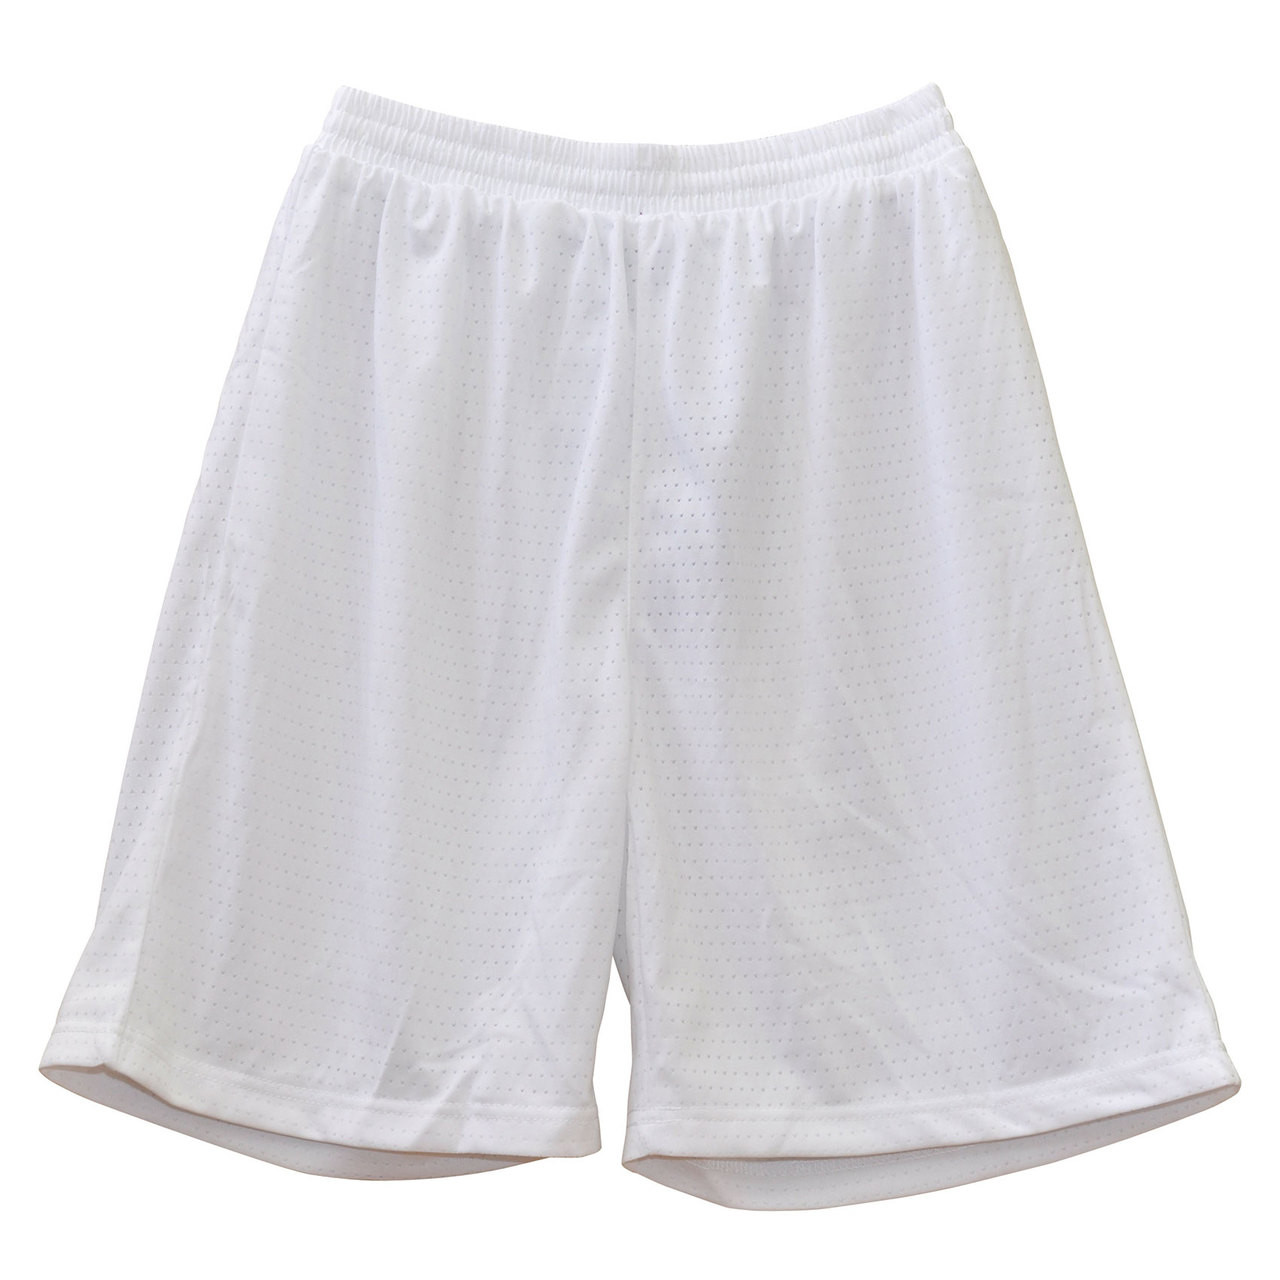 Basketball shorts men | wholesale bulk buy team basketball uniform online